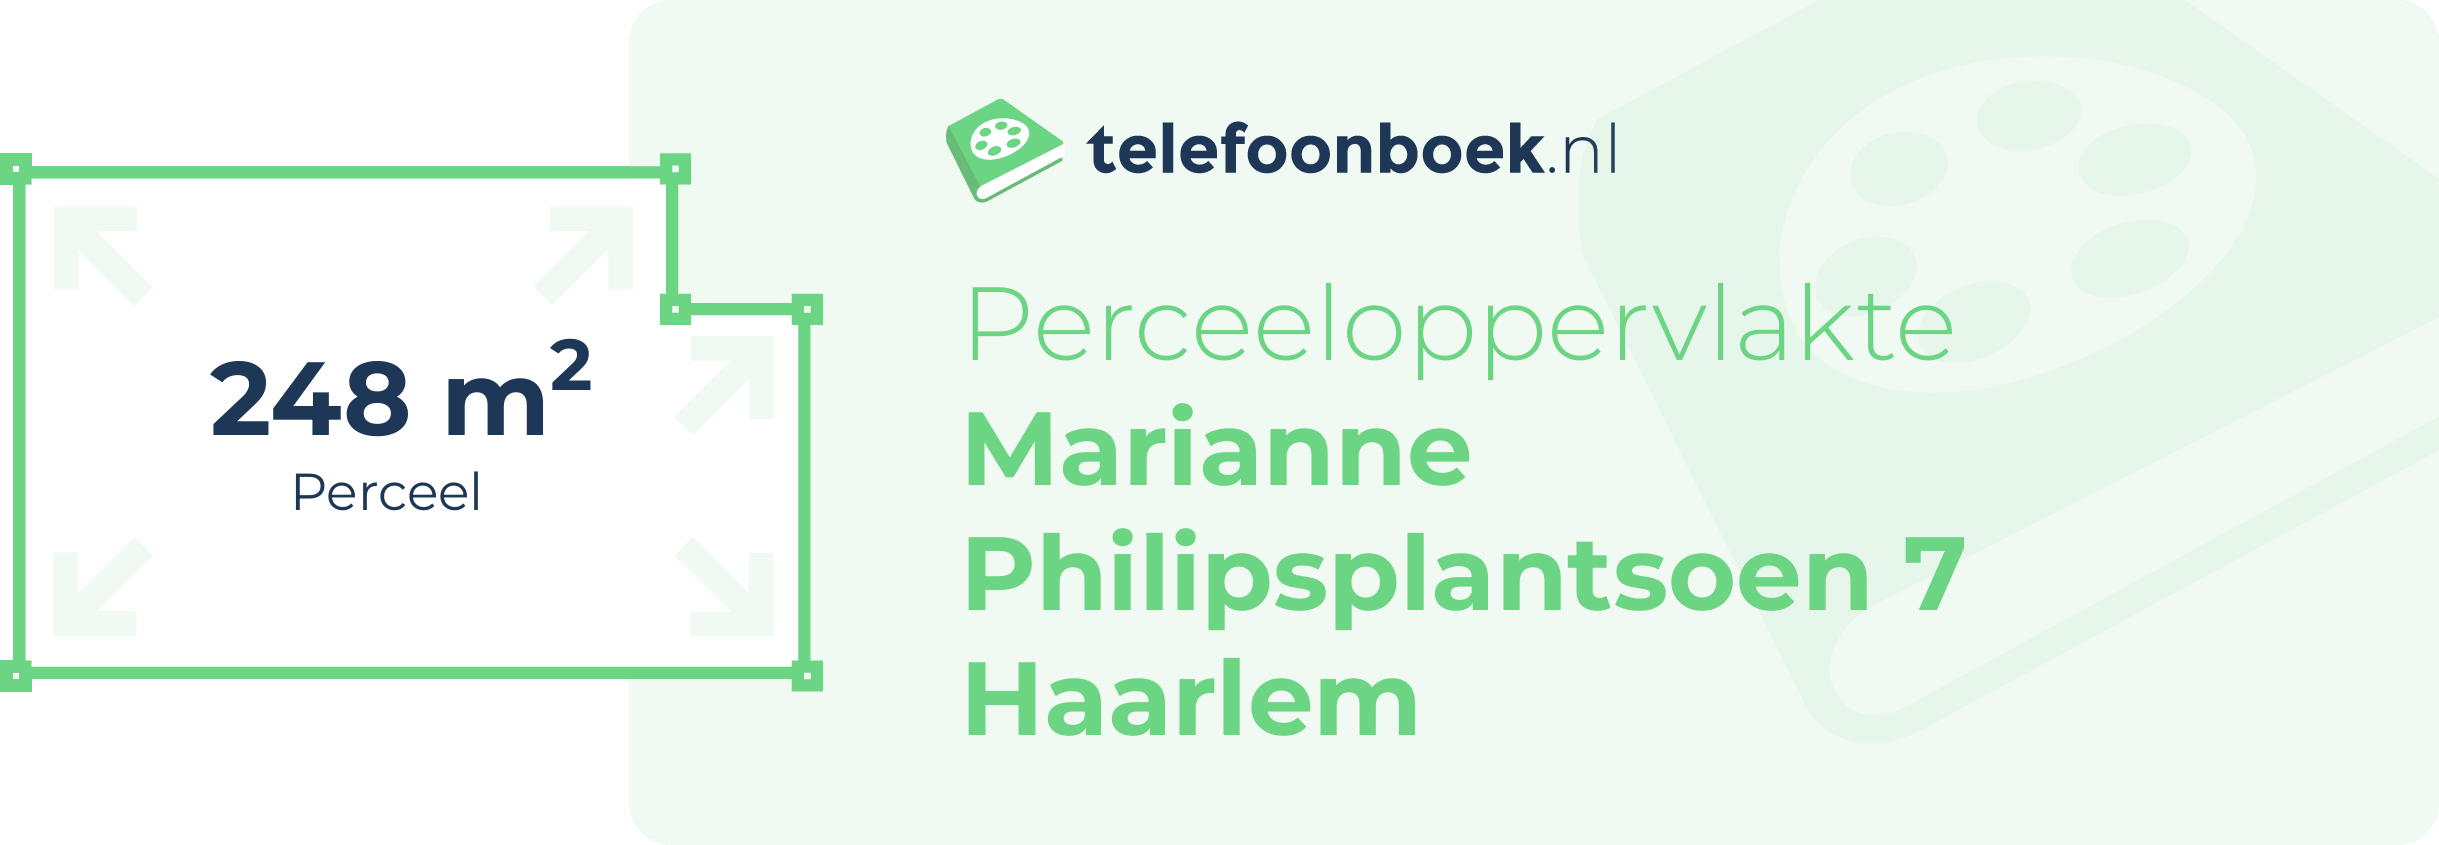 Perceeloppervlakte Marianne Philipsplantsoen 7 Haarlem